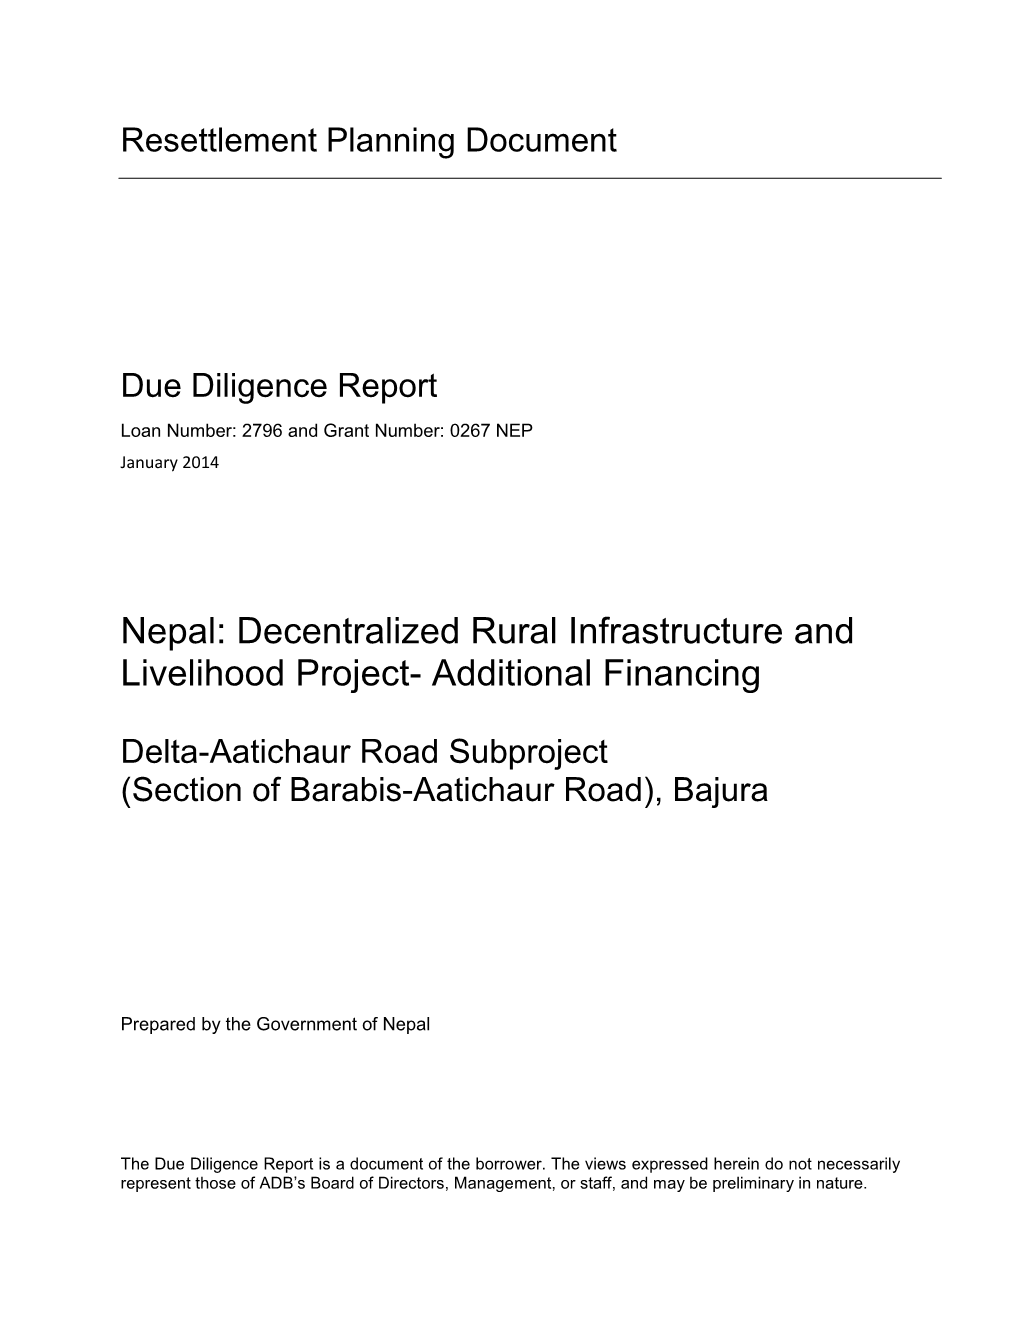 Decentralized Rural Infrastructure and Livelihood Project-Additional Financing (DRILP-AF)